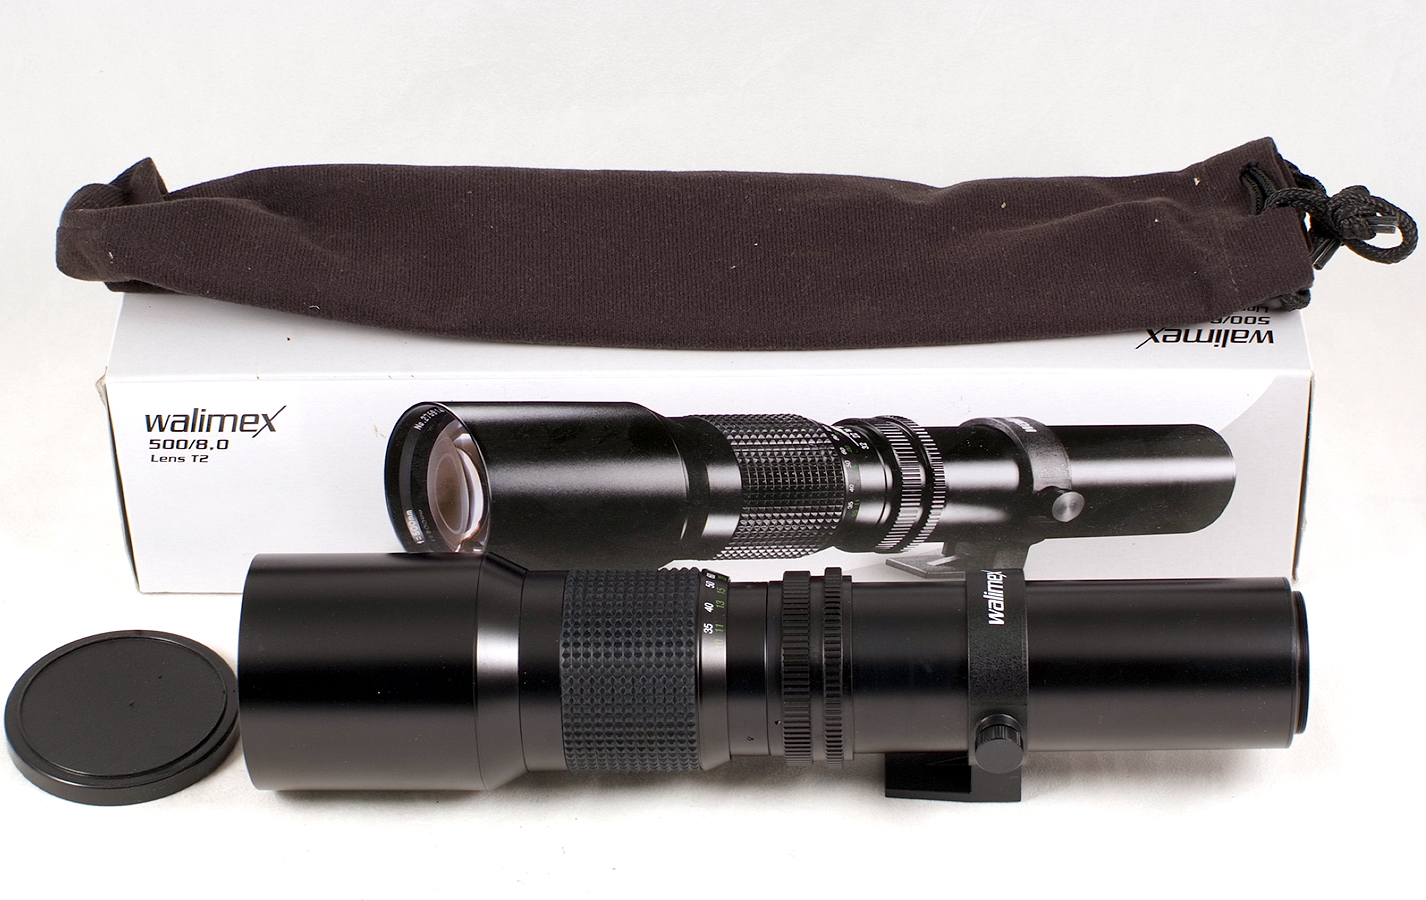 Walimex 500mm M42 T-mount Reflex Lens.